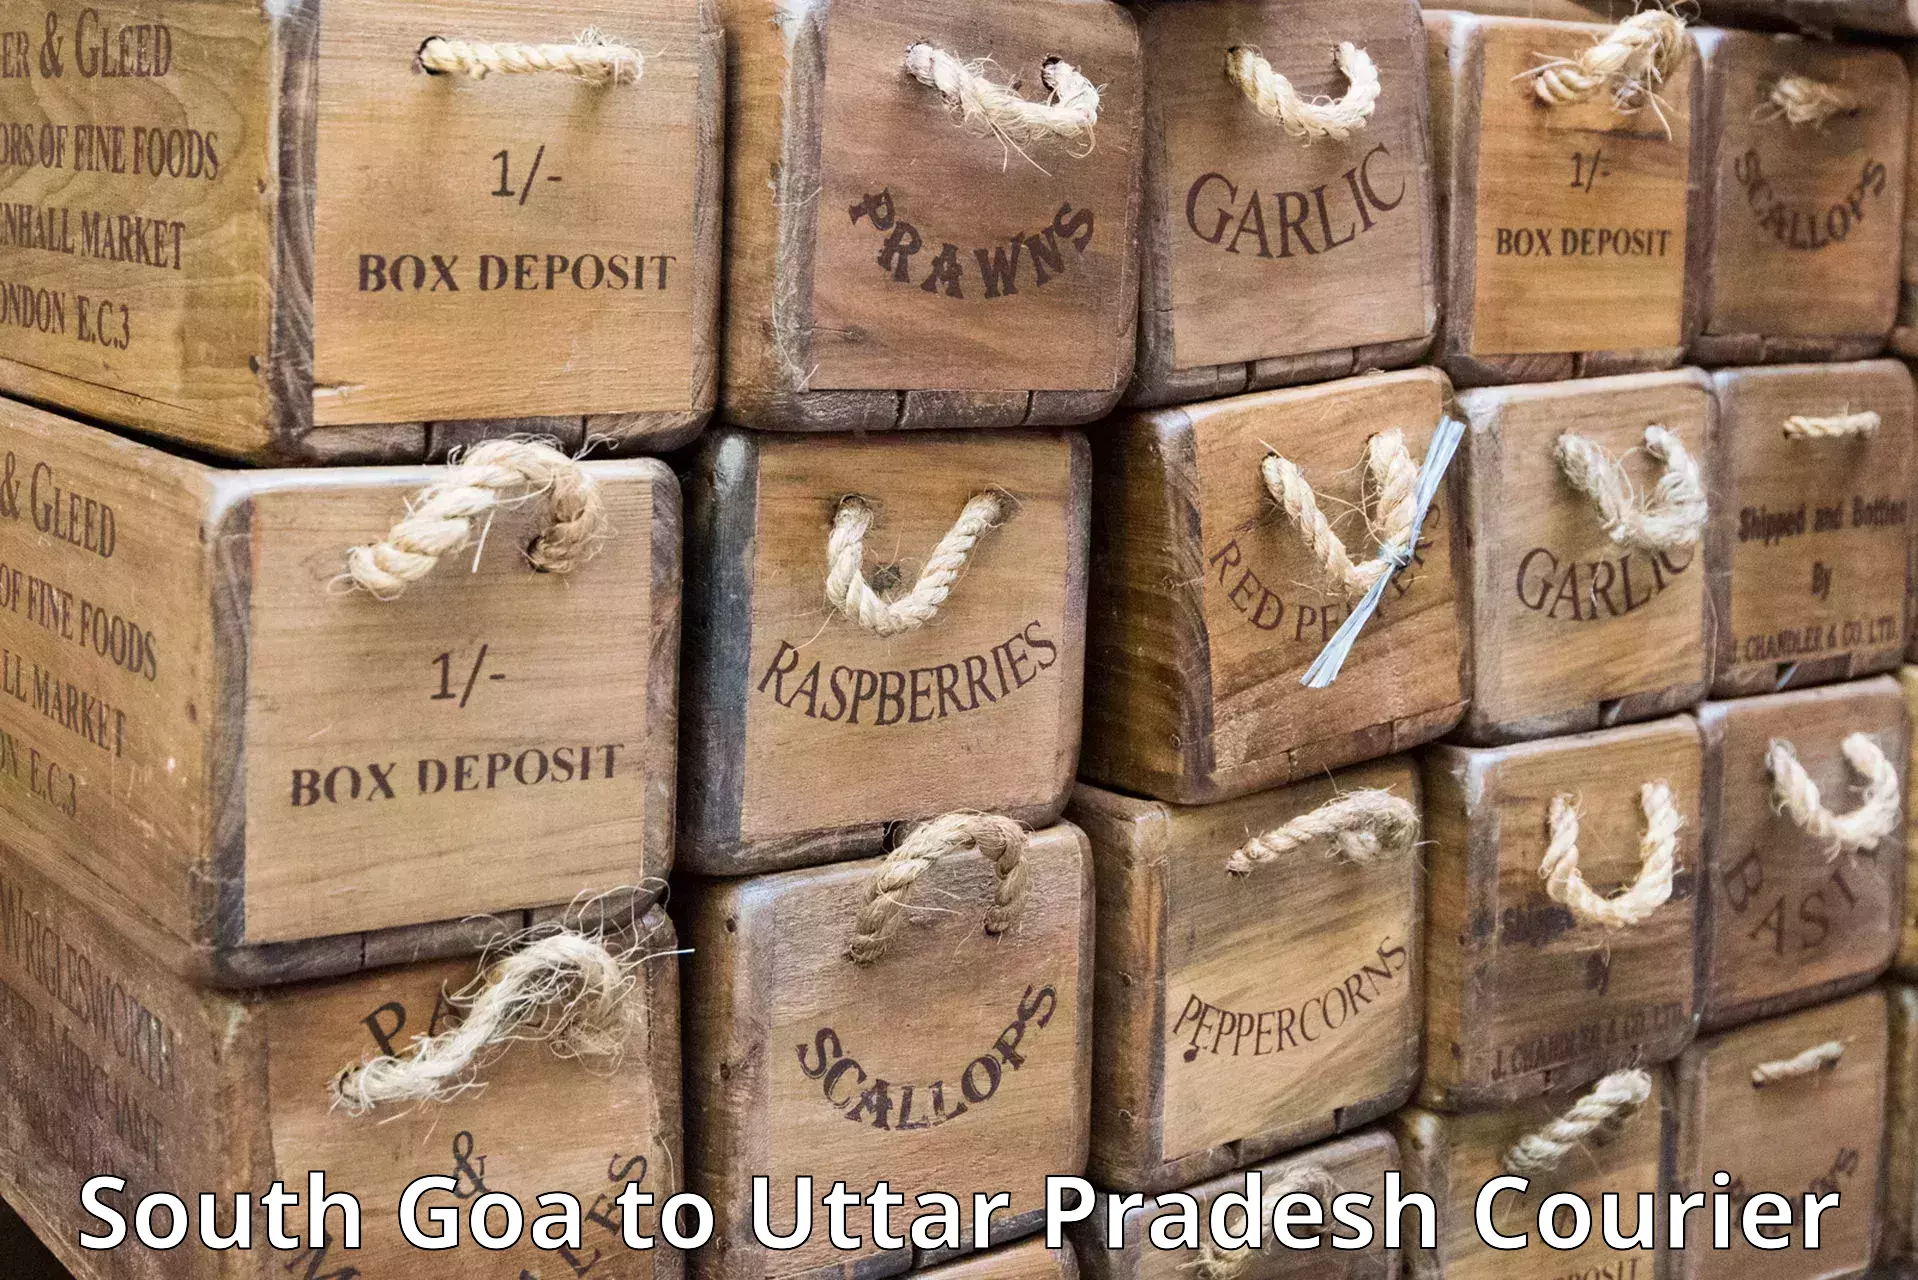 User-friendly delivery service South Goa to Gorakhpur